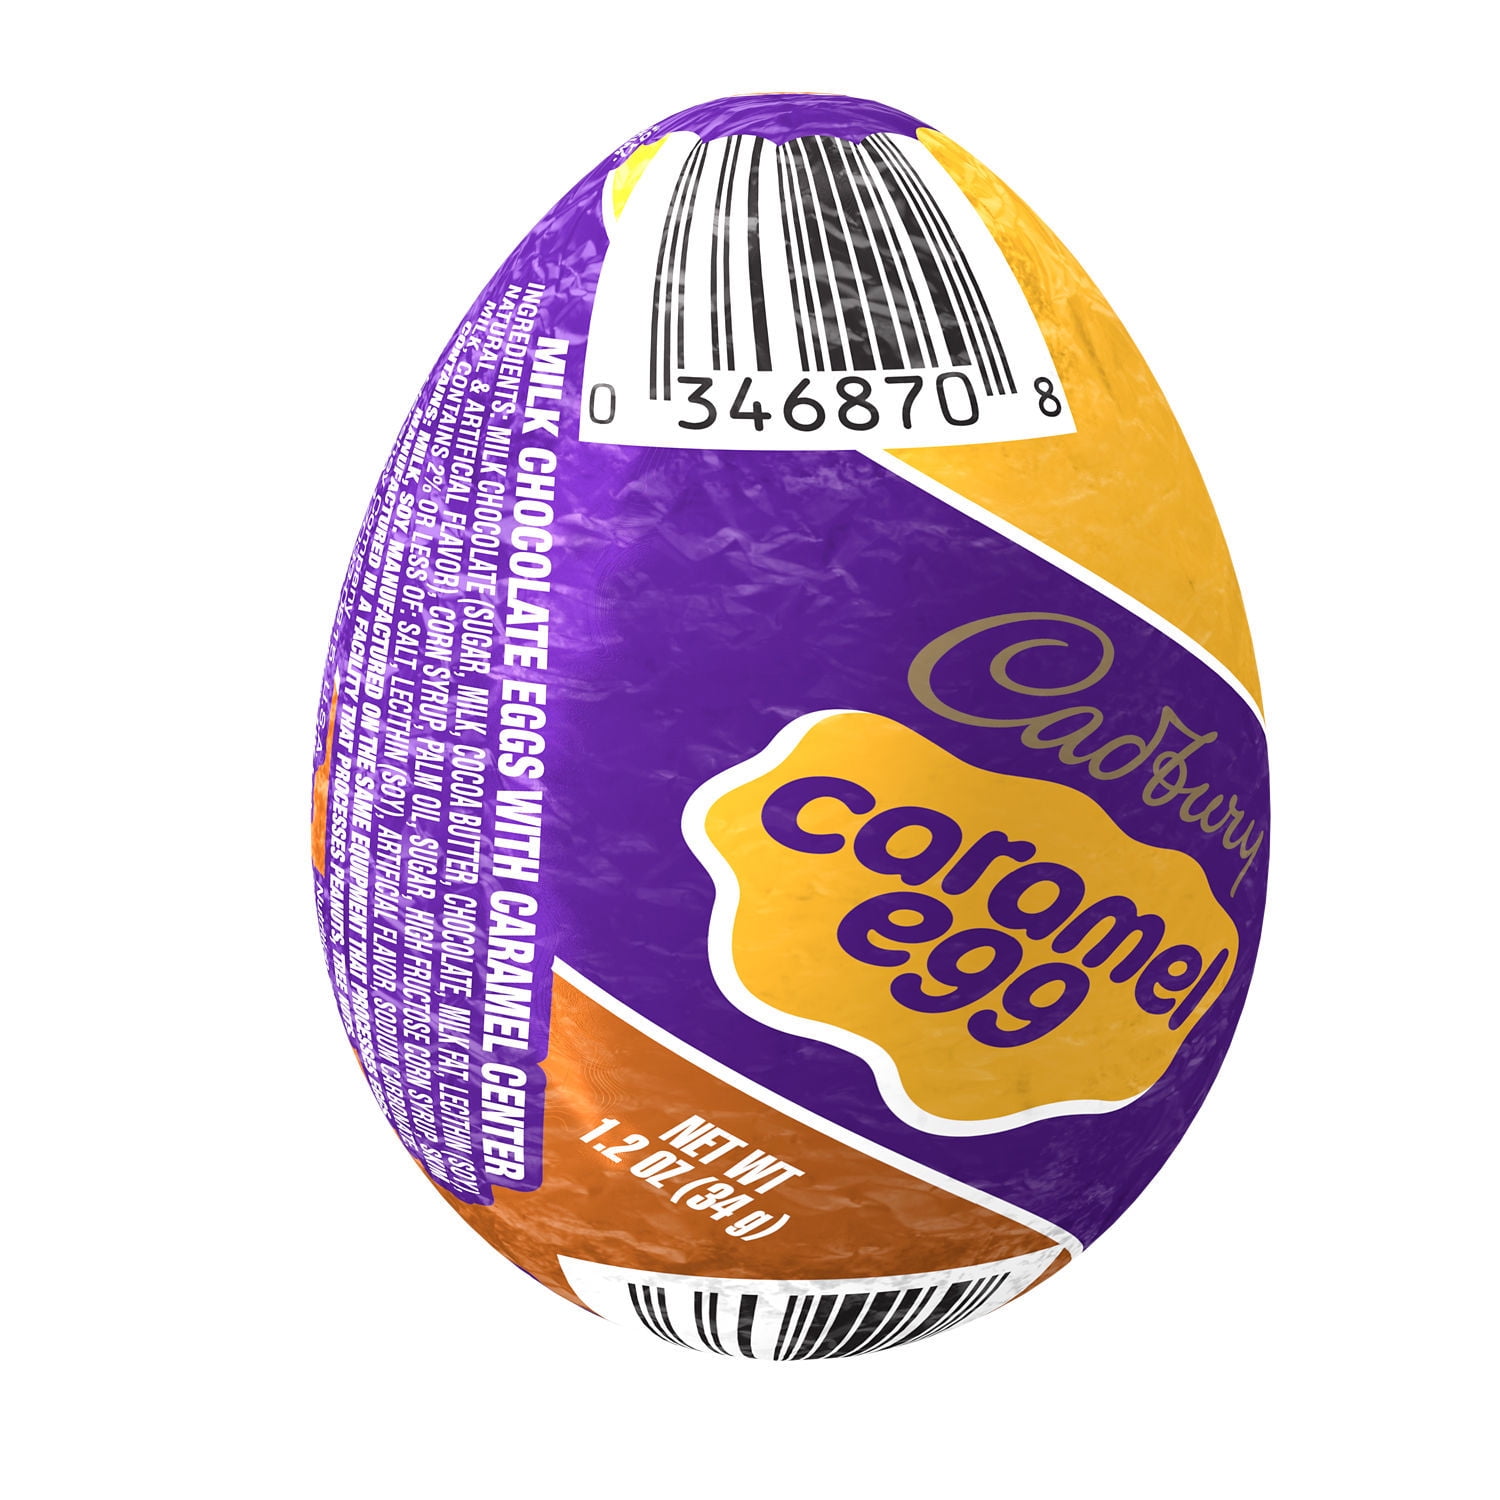 CADBURY, Milk Chocolate Caramel Egg, Easter Candy, 1.2 oz, Egg